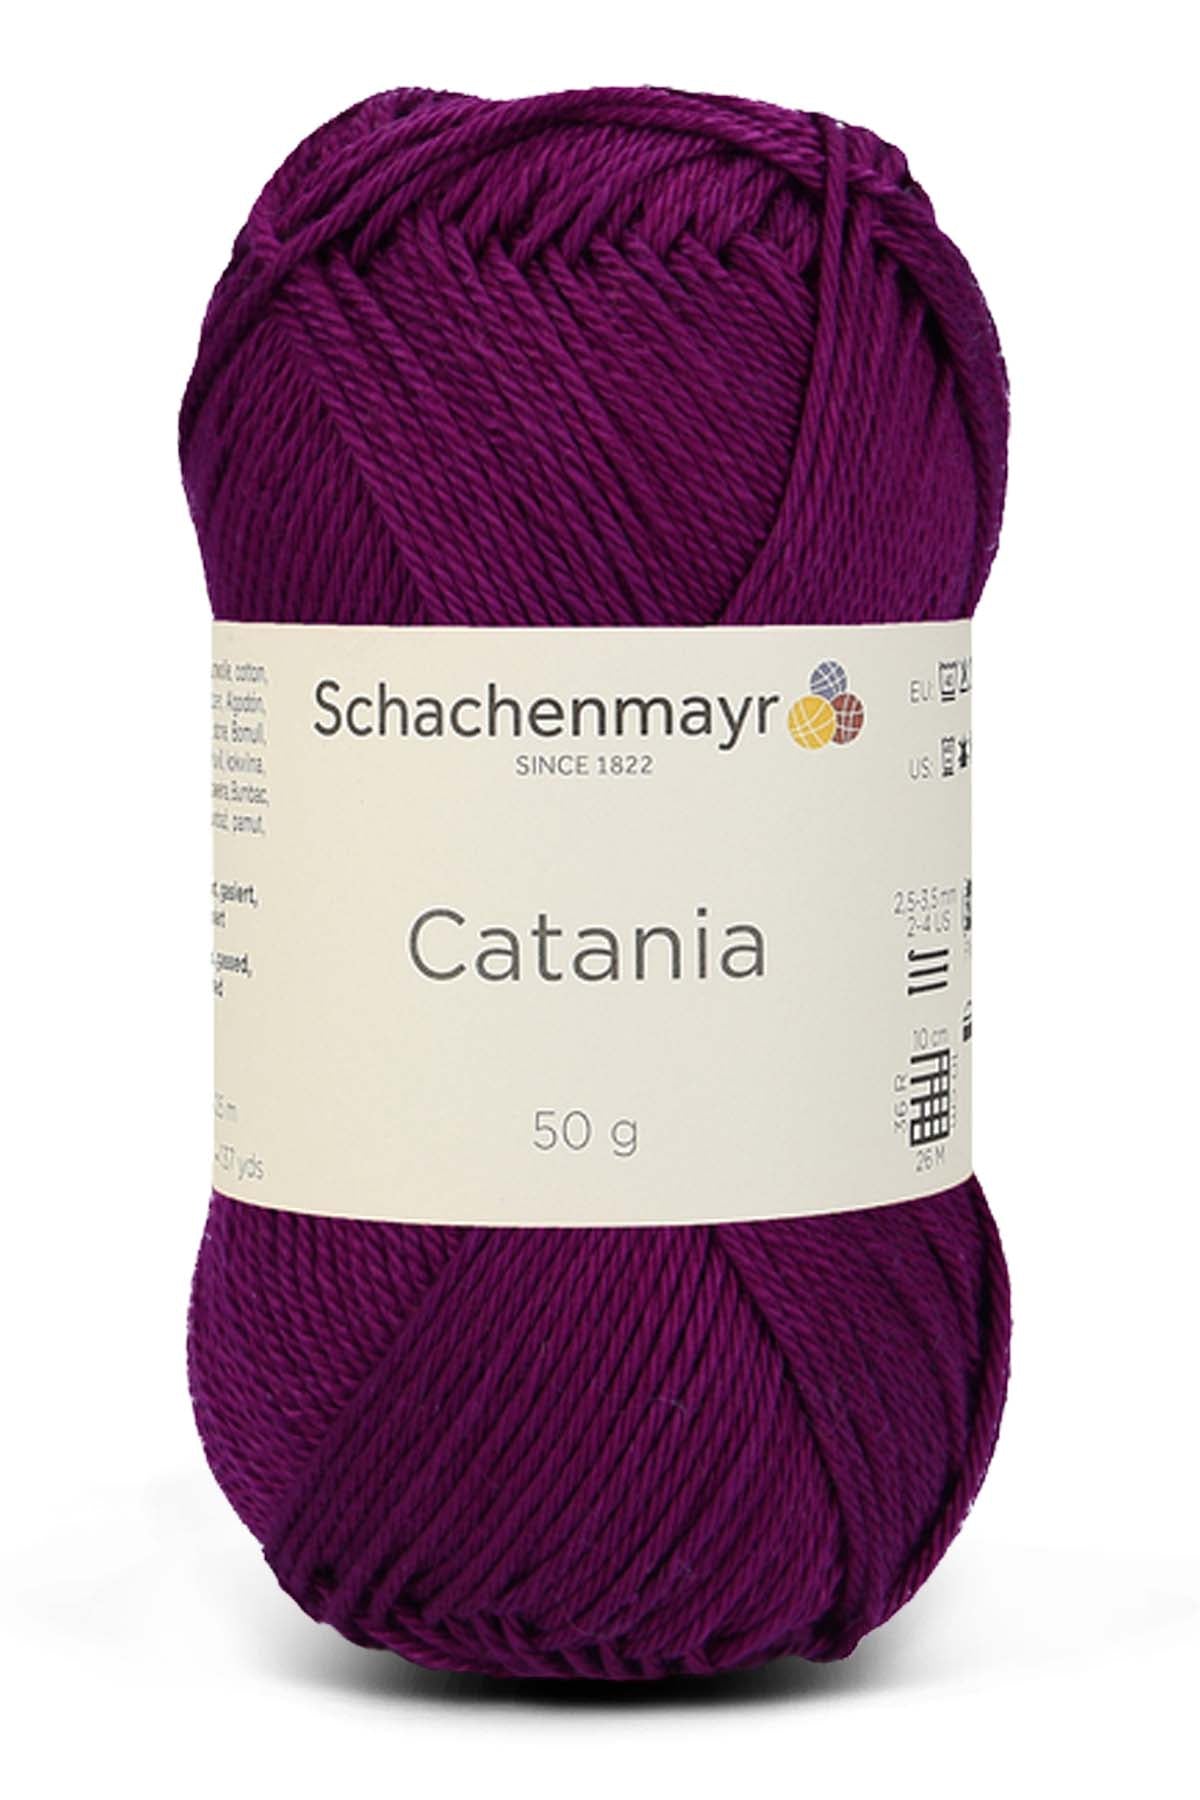 Schachenmayr Catania Cotton Yarn